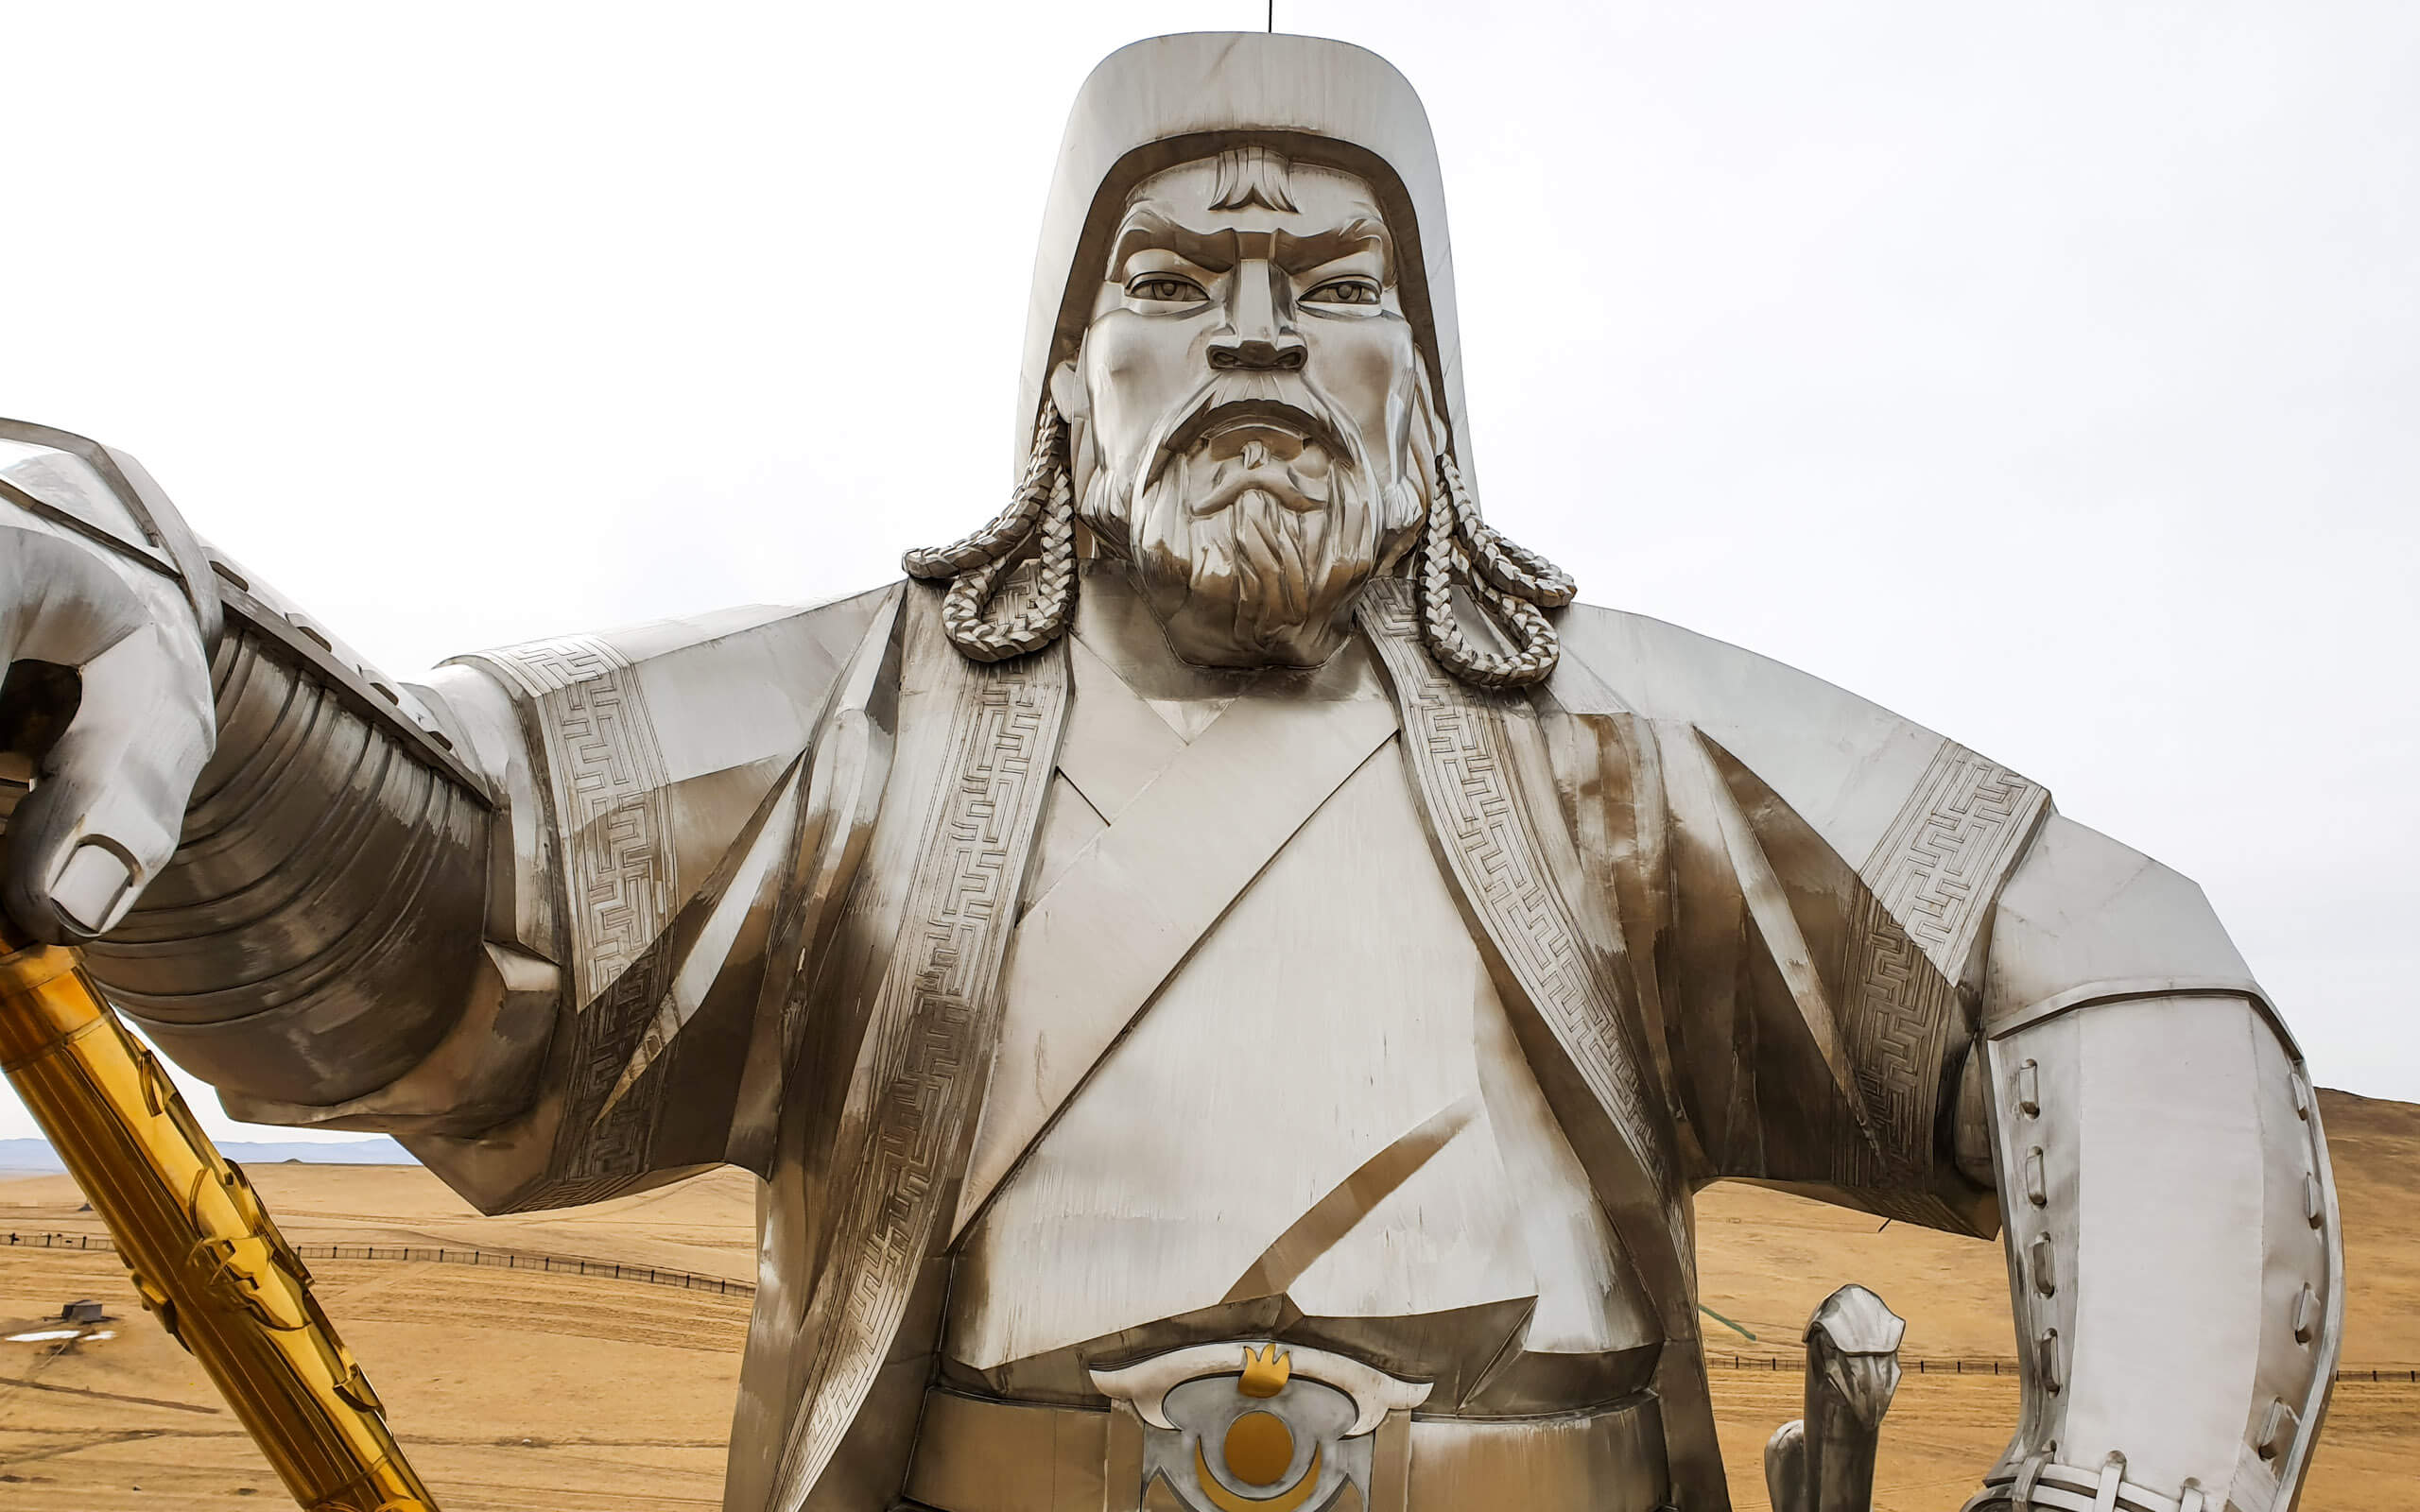 The Genghis Khan Equestrian Statue